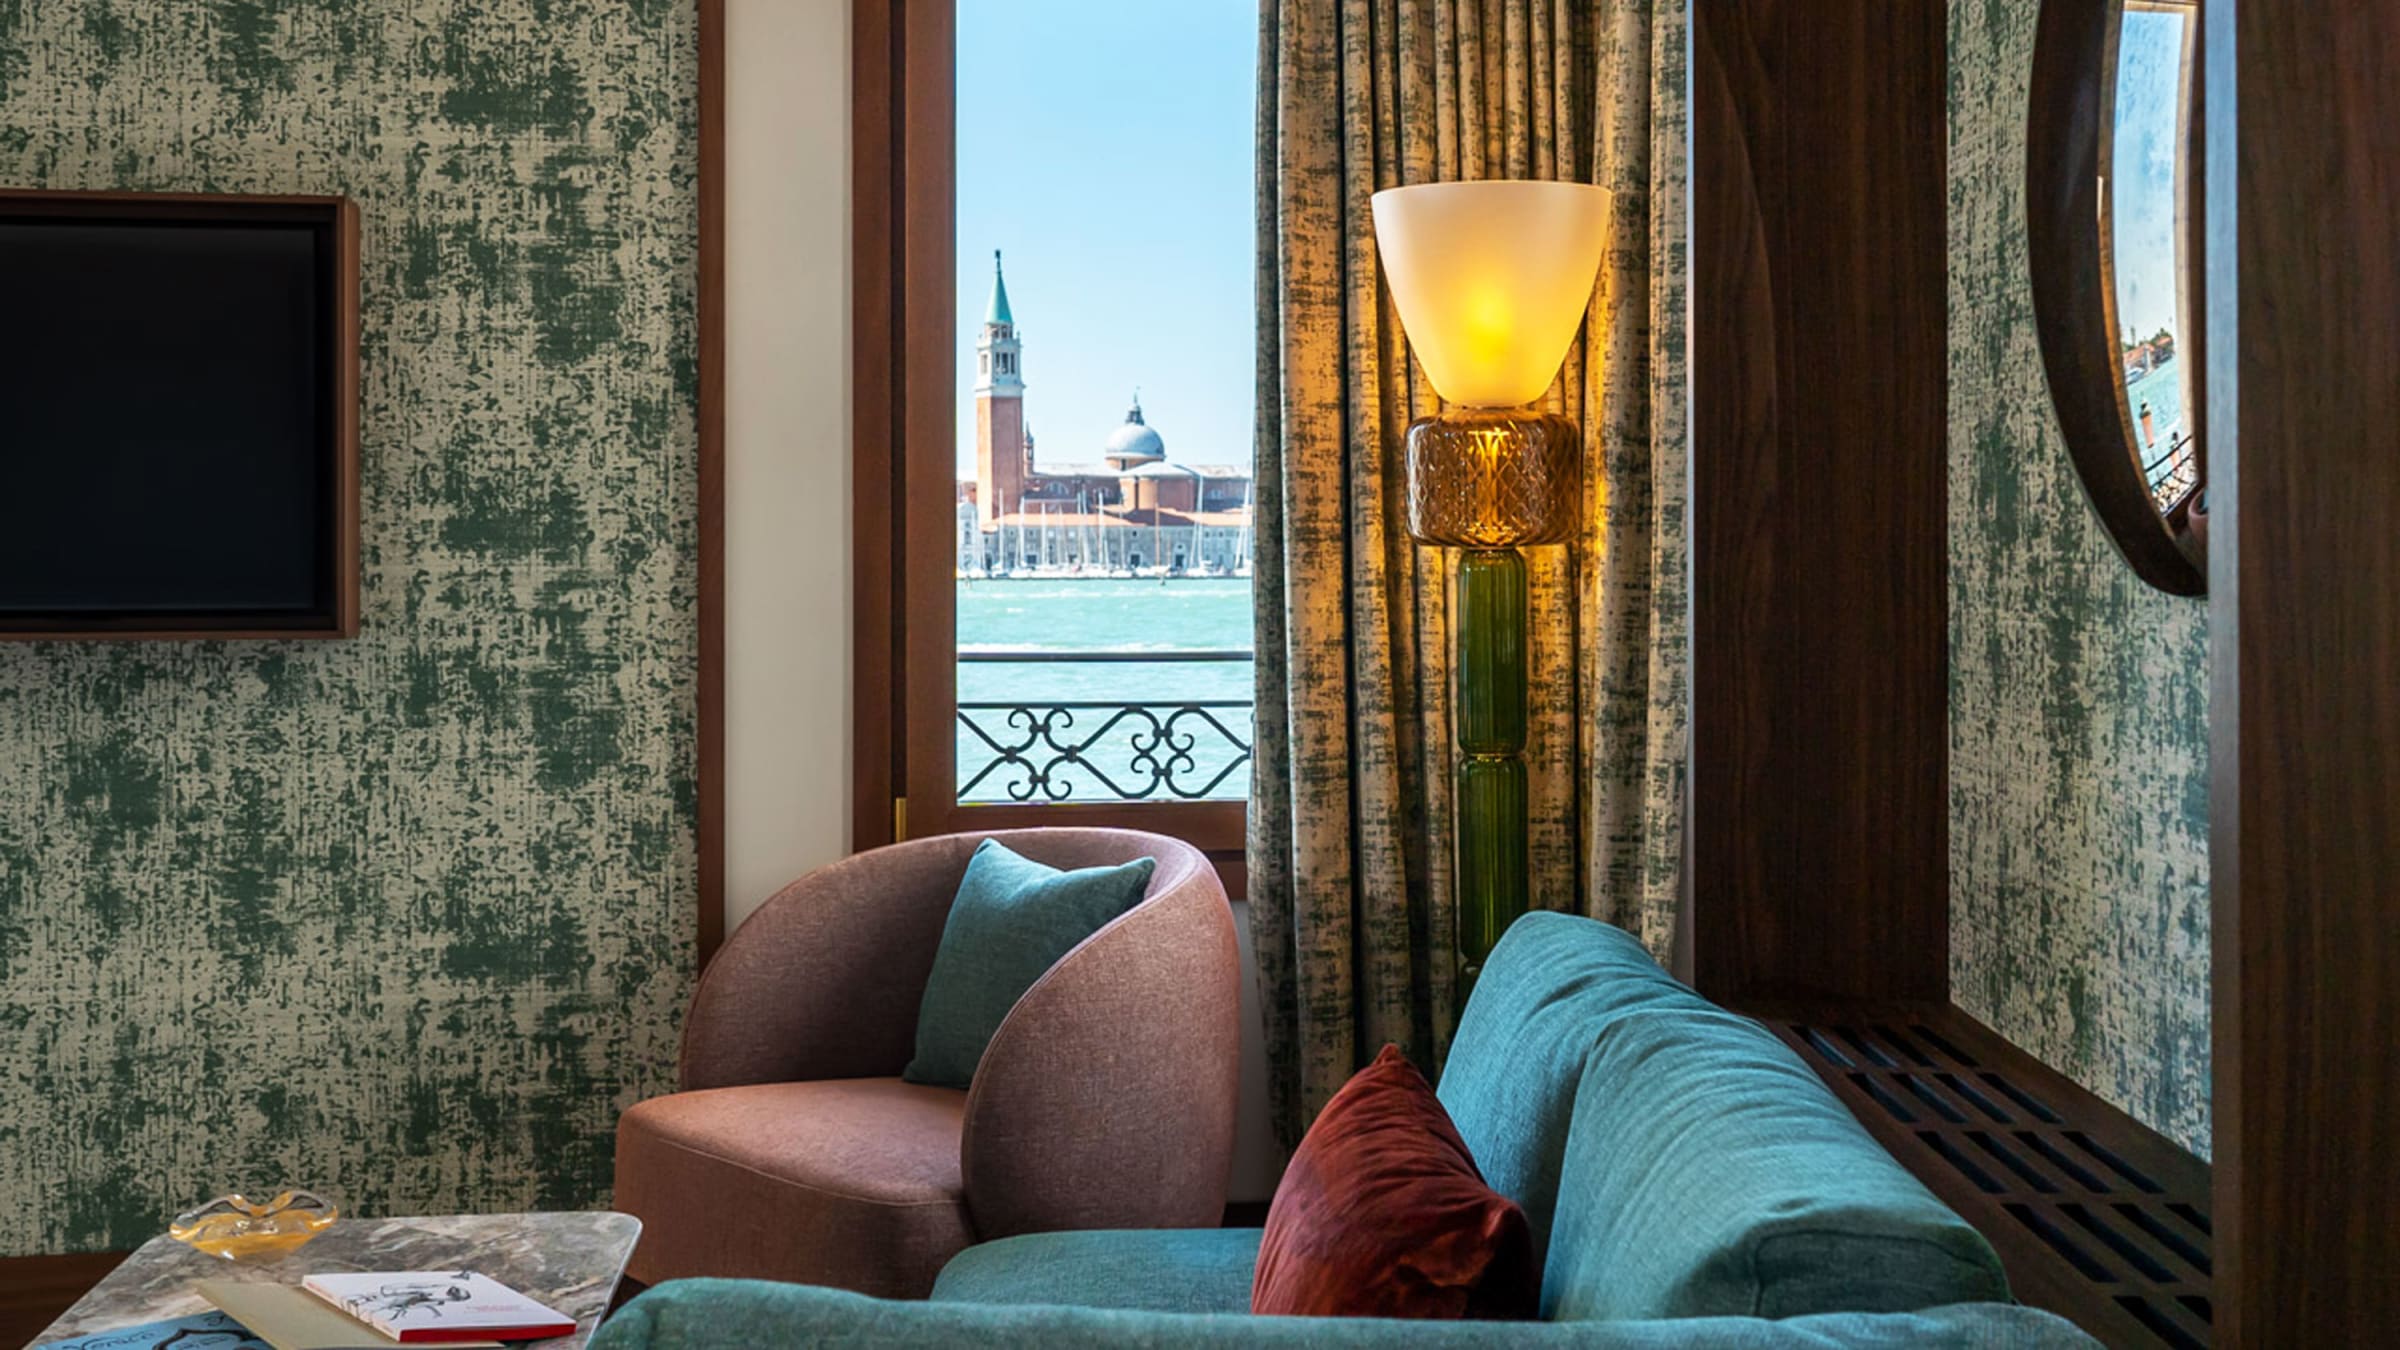 Ca’ di Dio, a Former Hospice, Is Venice’s Newest Five-Star Hotel